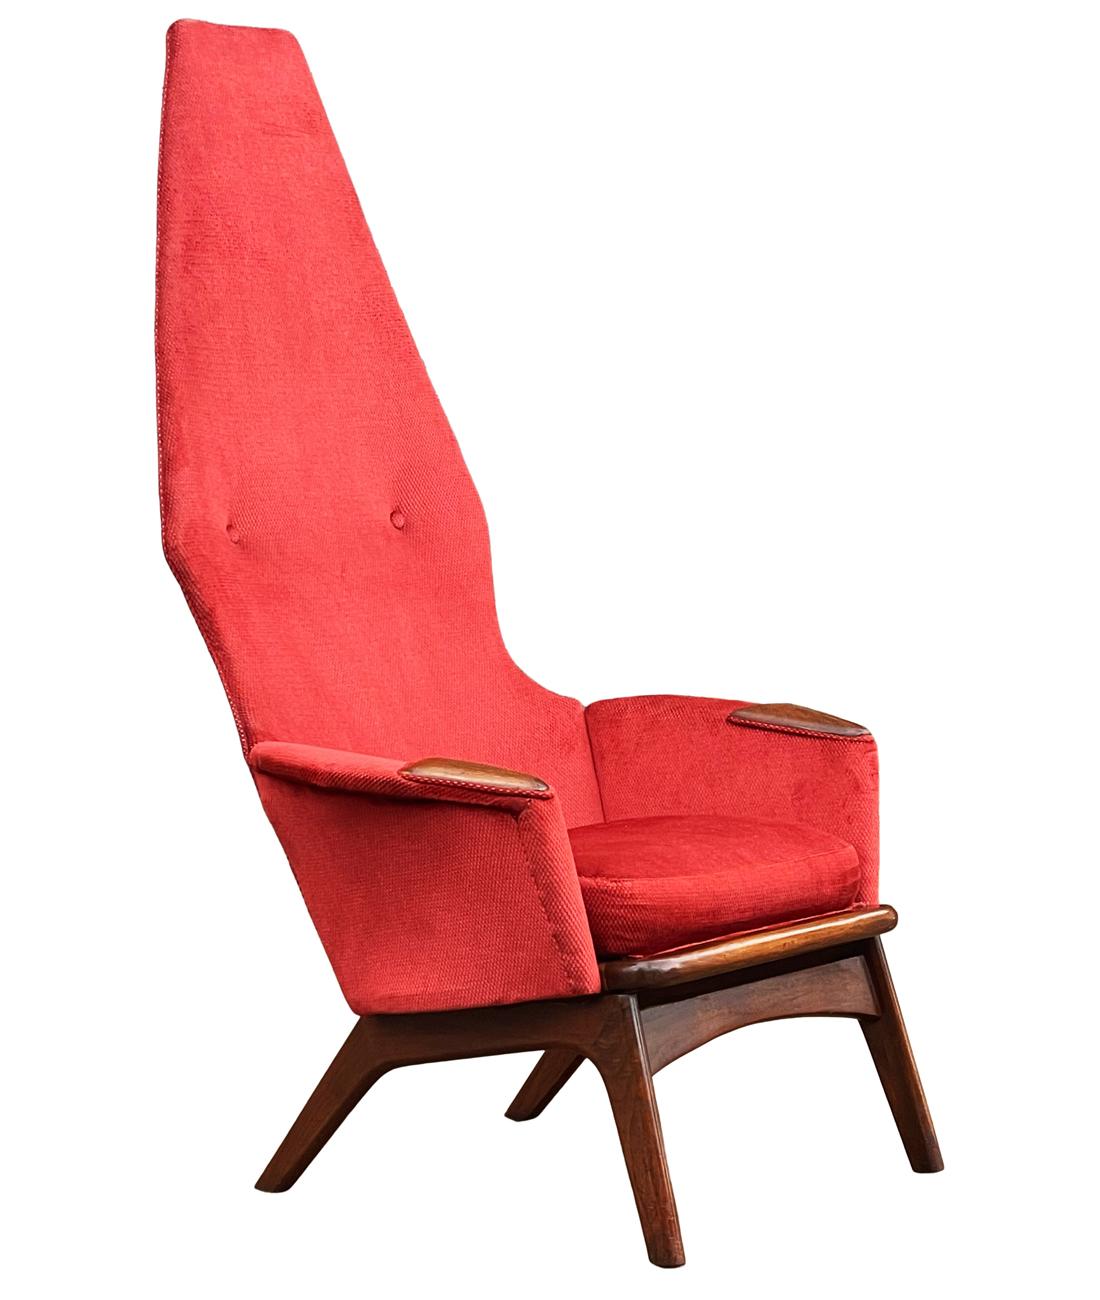 mid century modern high back chair